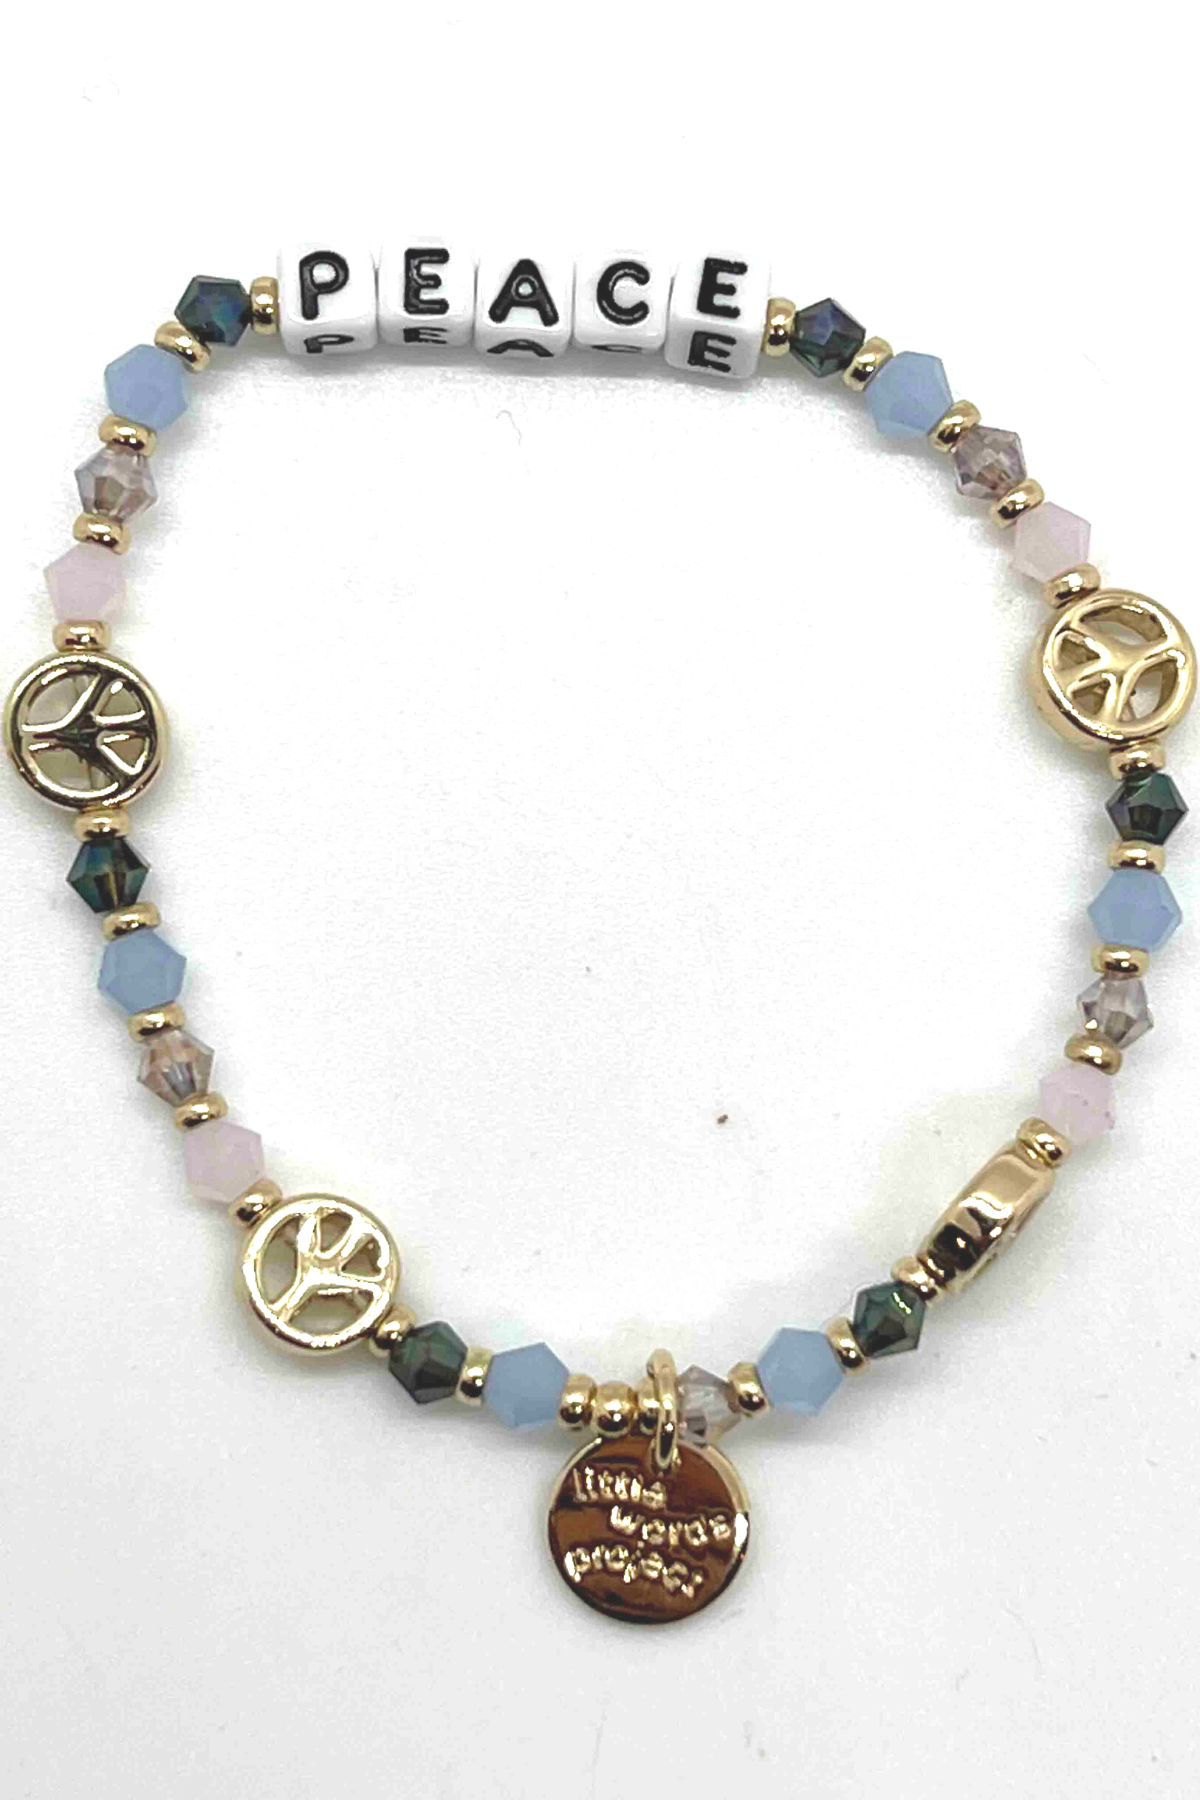 Peace Crystal Word Bracelets by Little Words Project